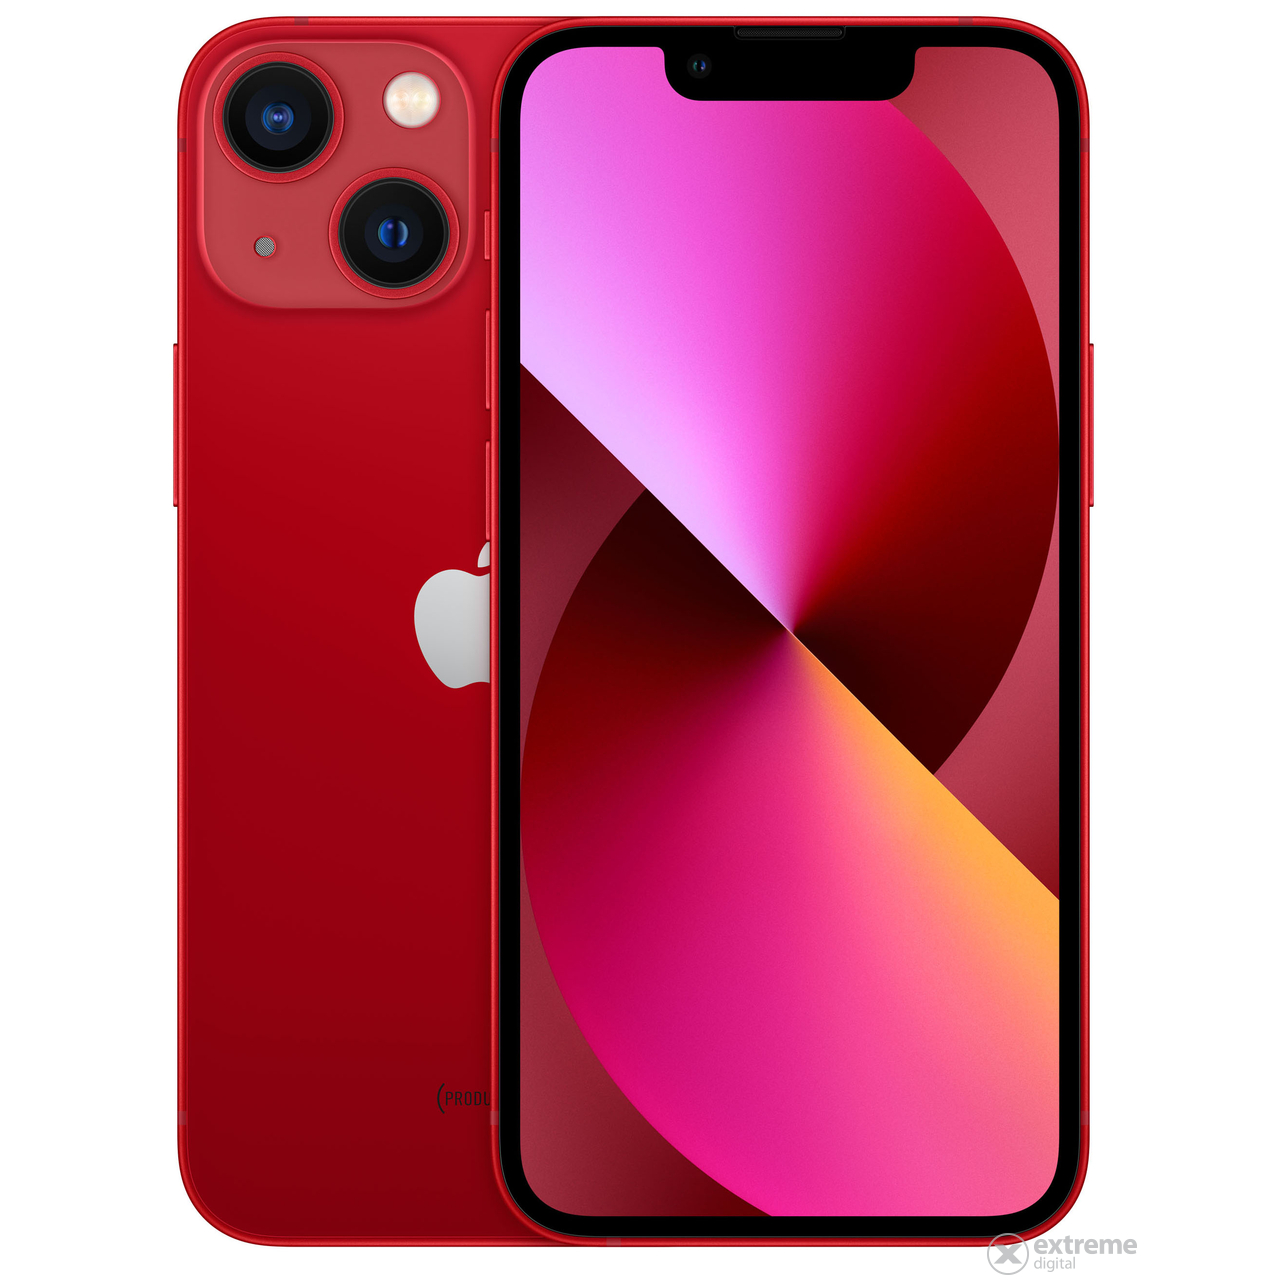 Apple iPhone 13 mini 256GB (mlk83hu/a), (PRODUCT) RED